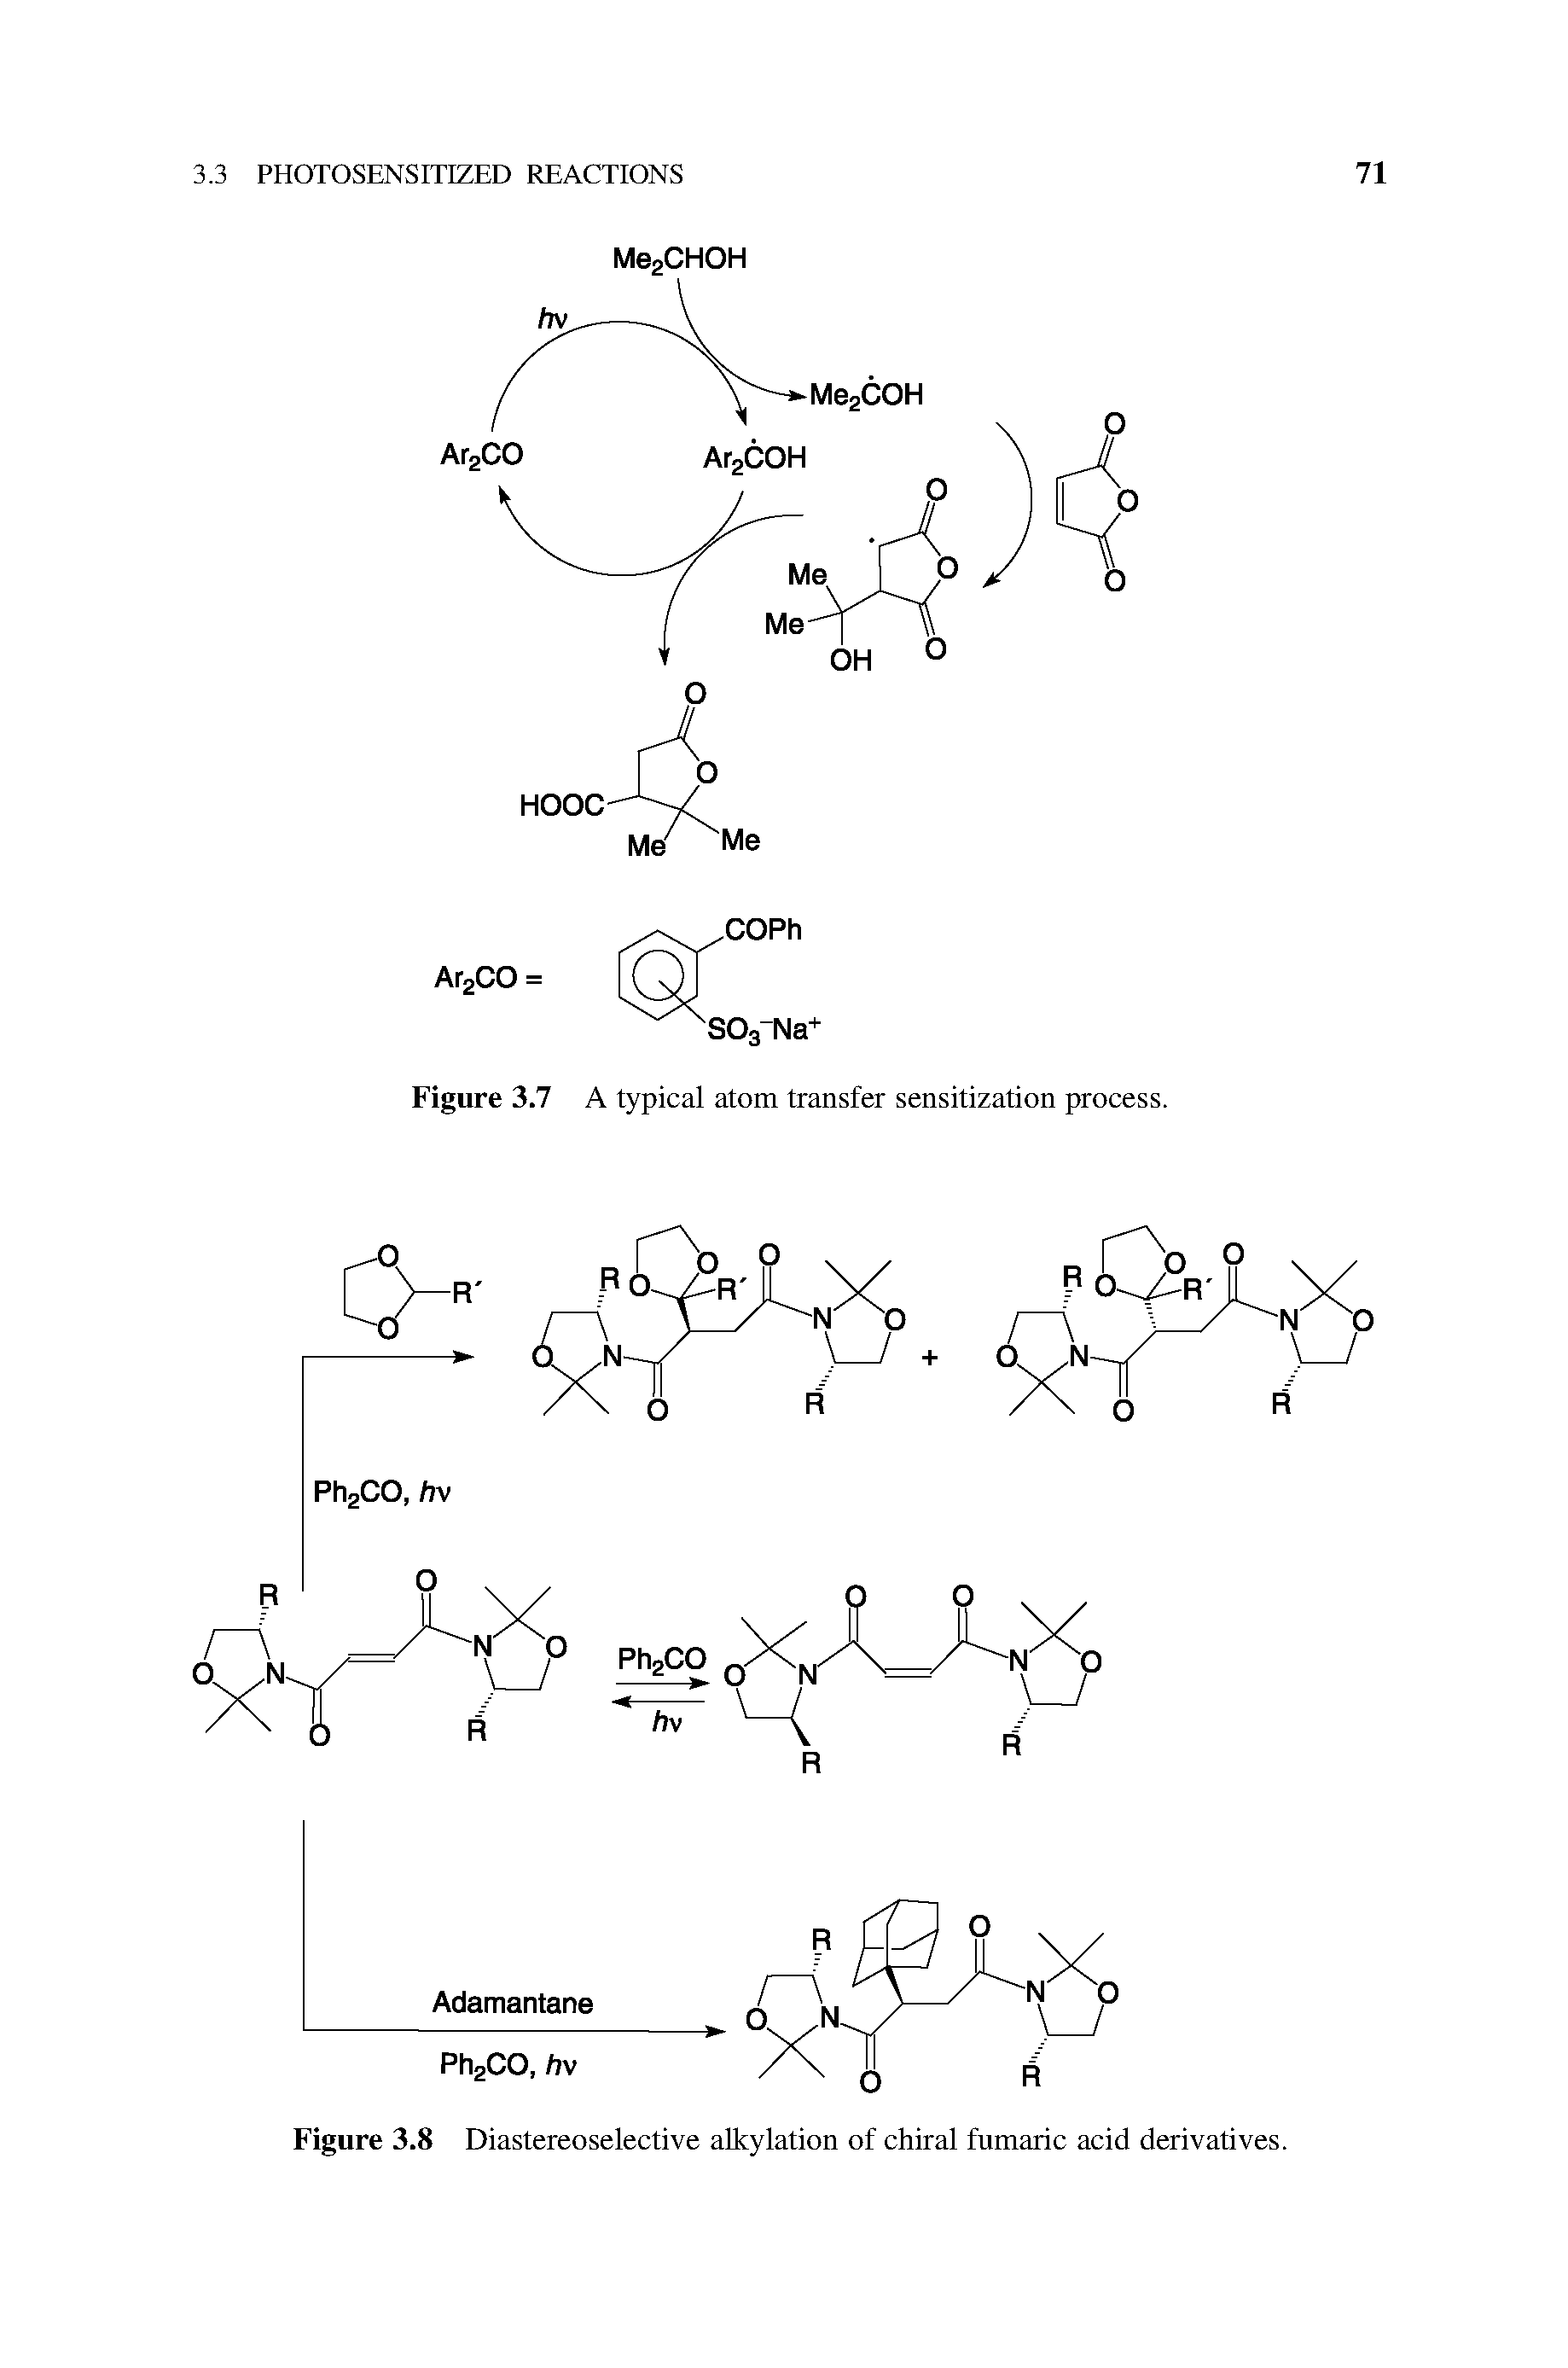 Figure 3.8 Diastereoselective alkylation of chiral fumaric acid derivatives.